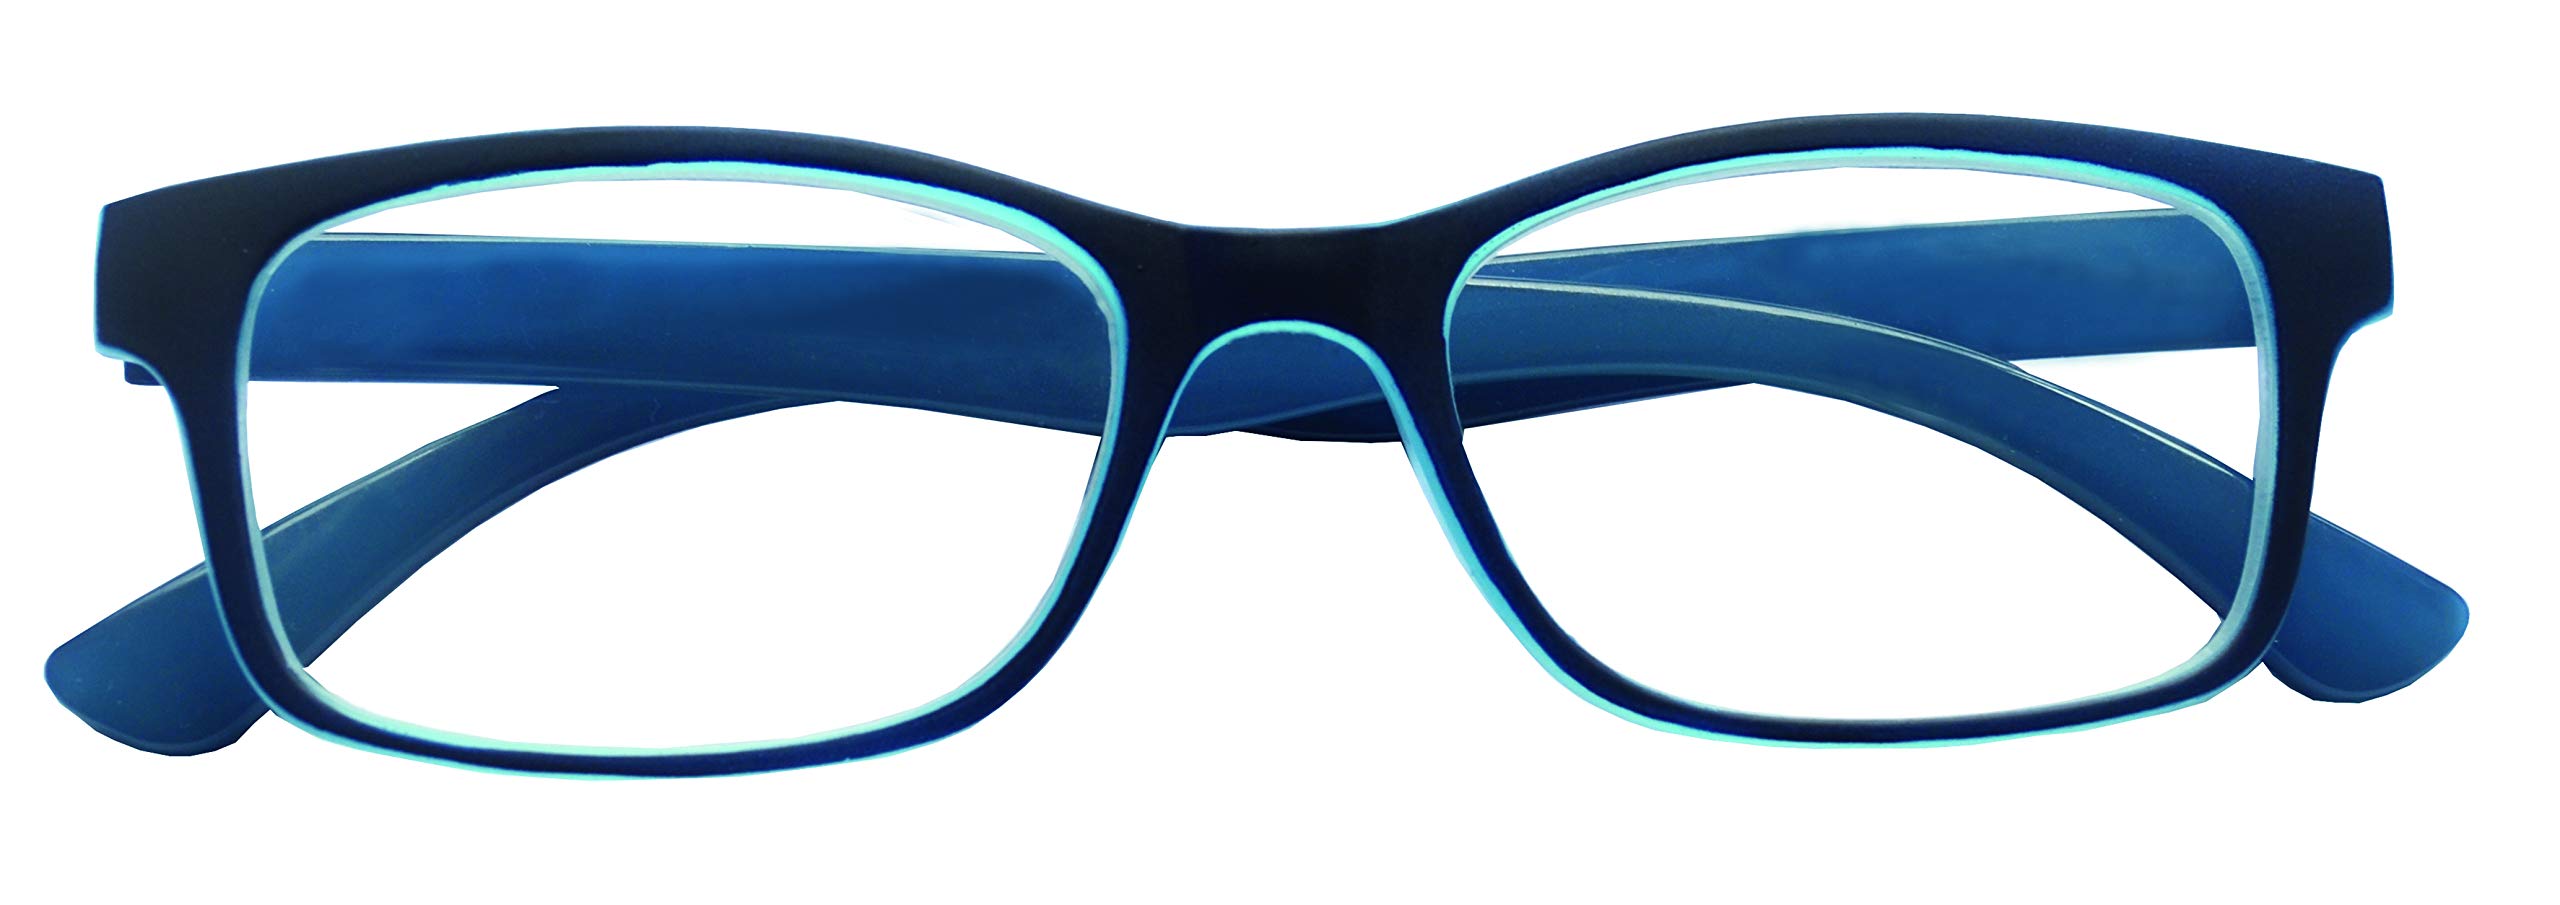 Occhiale da lettura freedom in plastica blu-azzurro +1,00